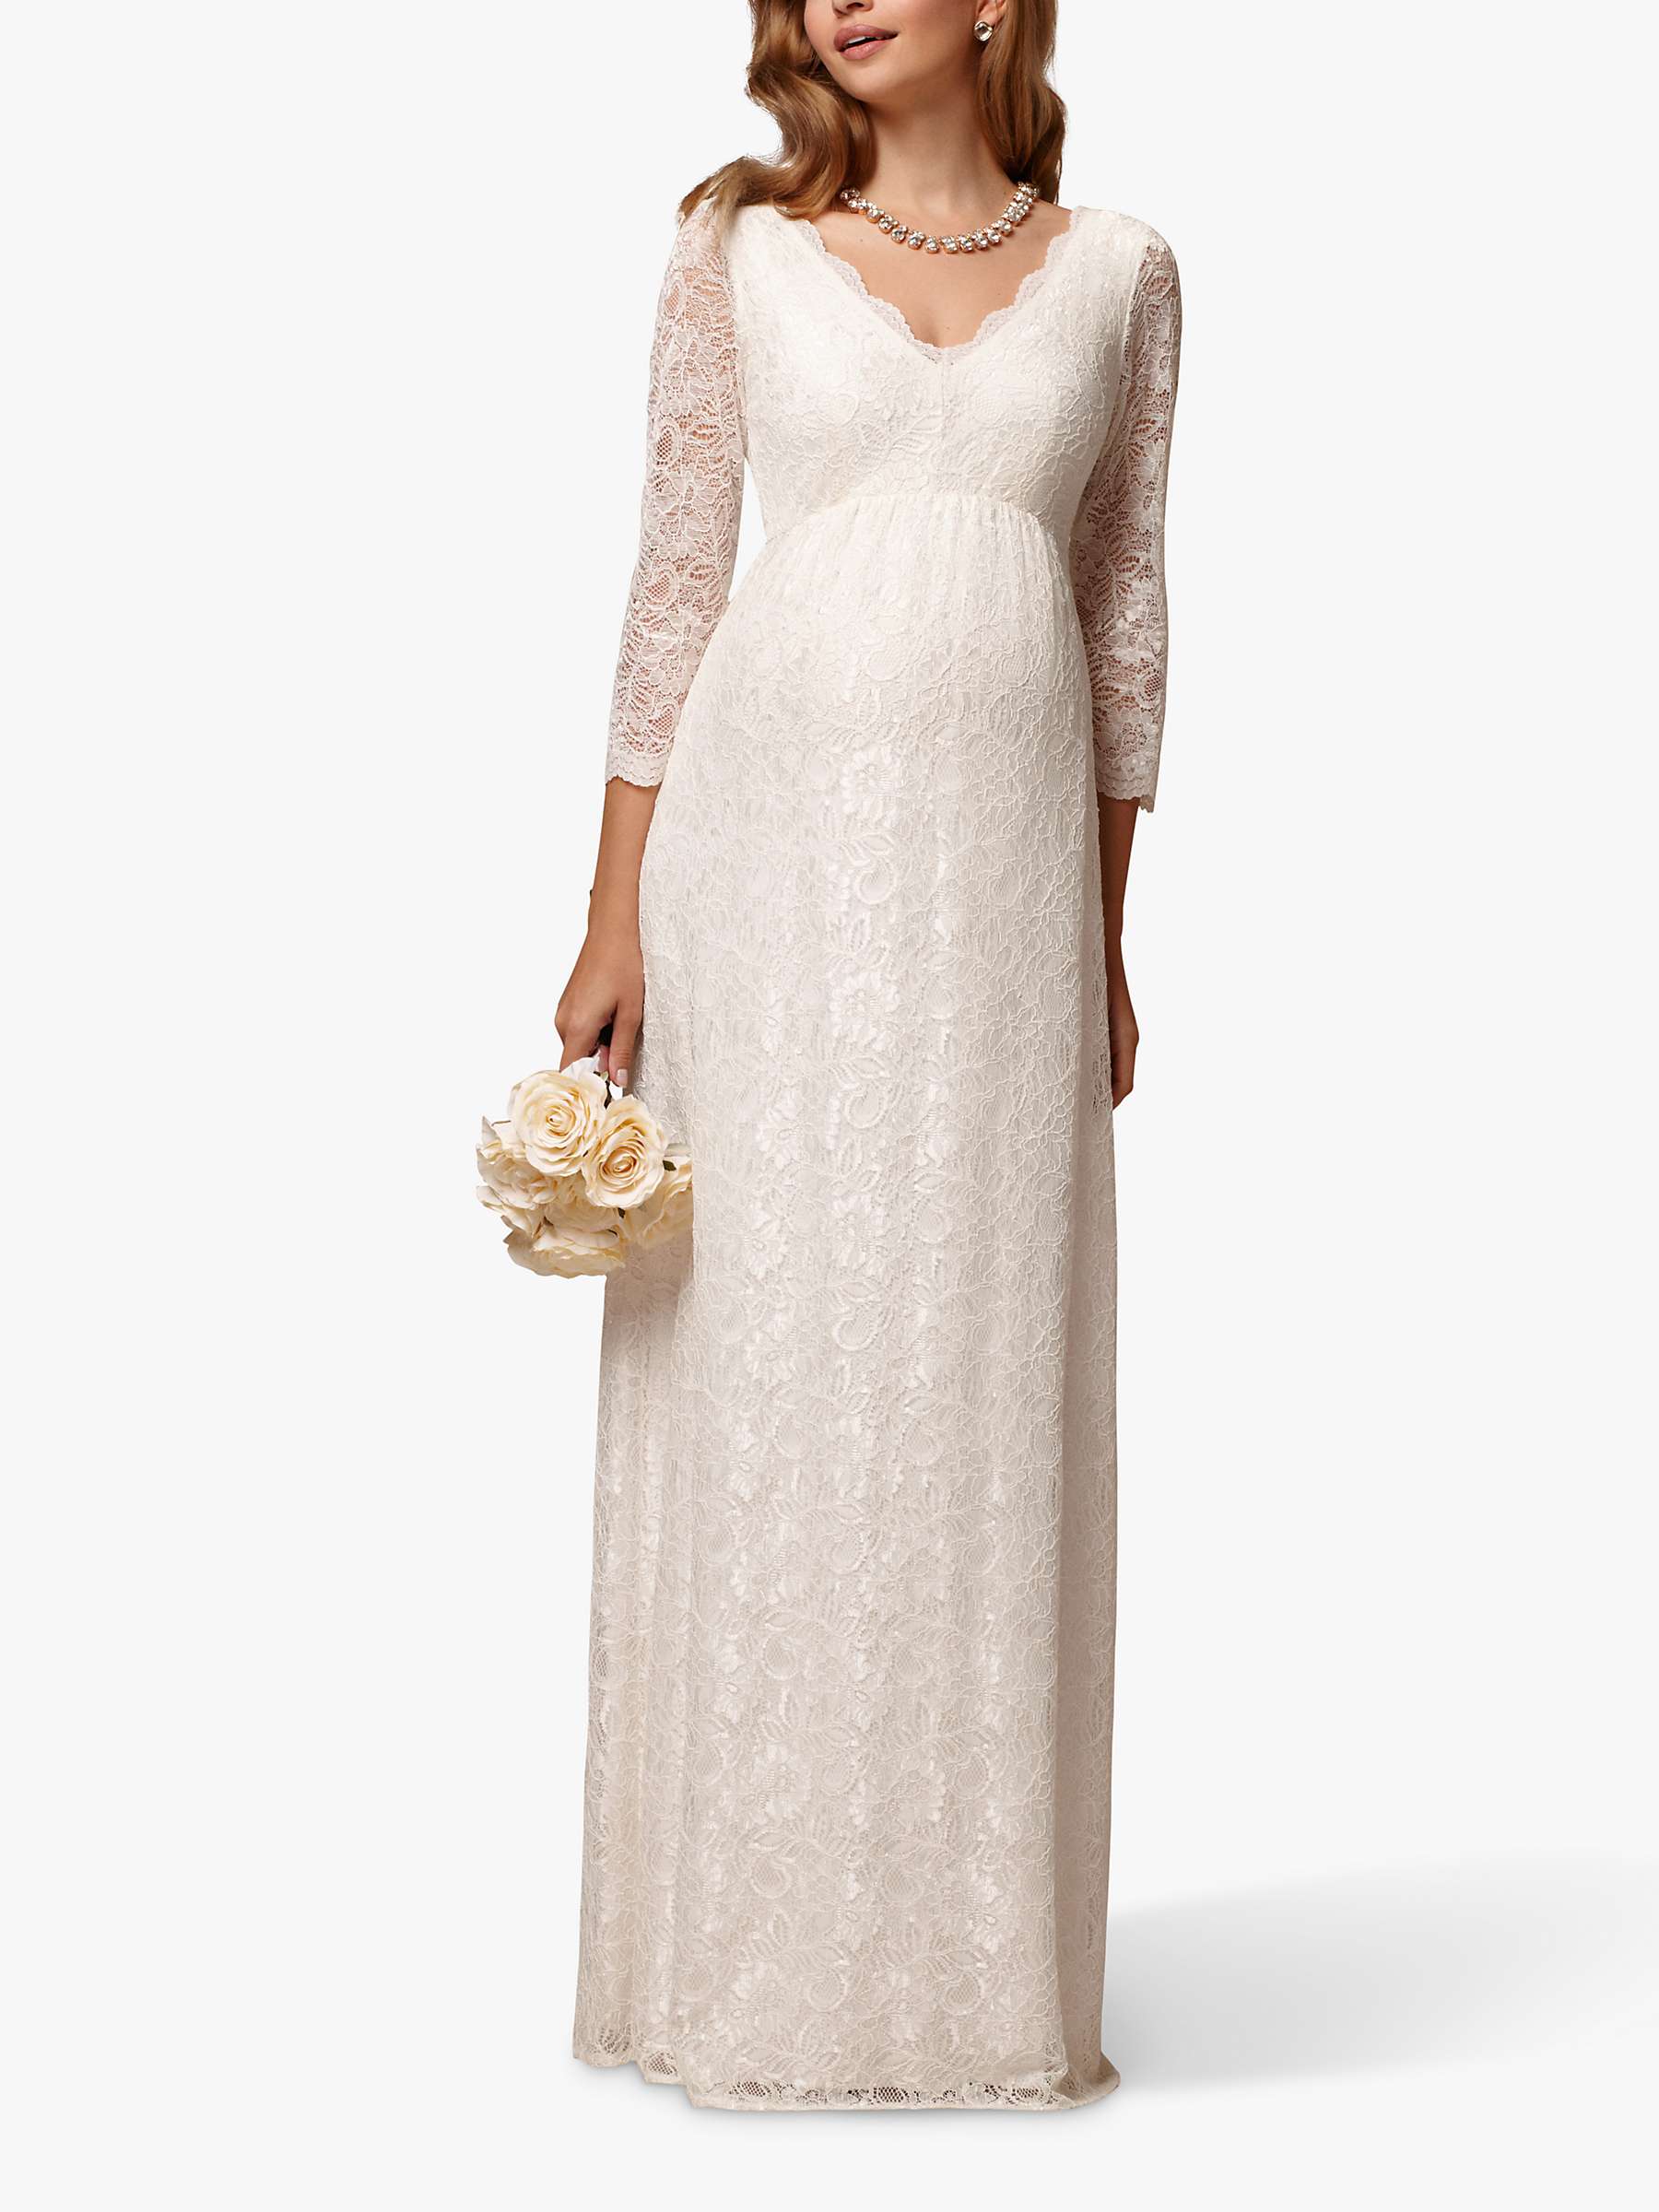 Buy Tiffany Rose Chloe Lace Maternity Wedding Dress, Ivory Online at johnlewis.com